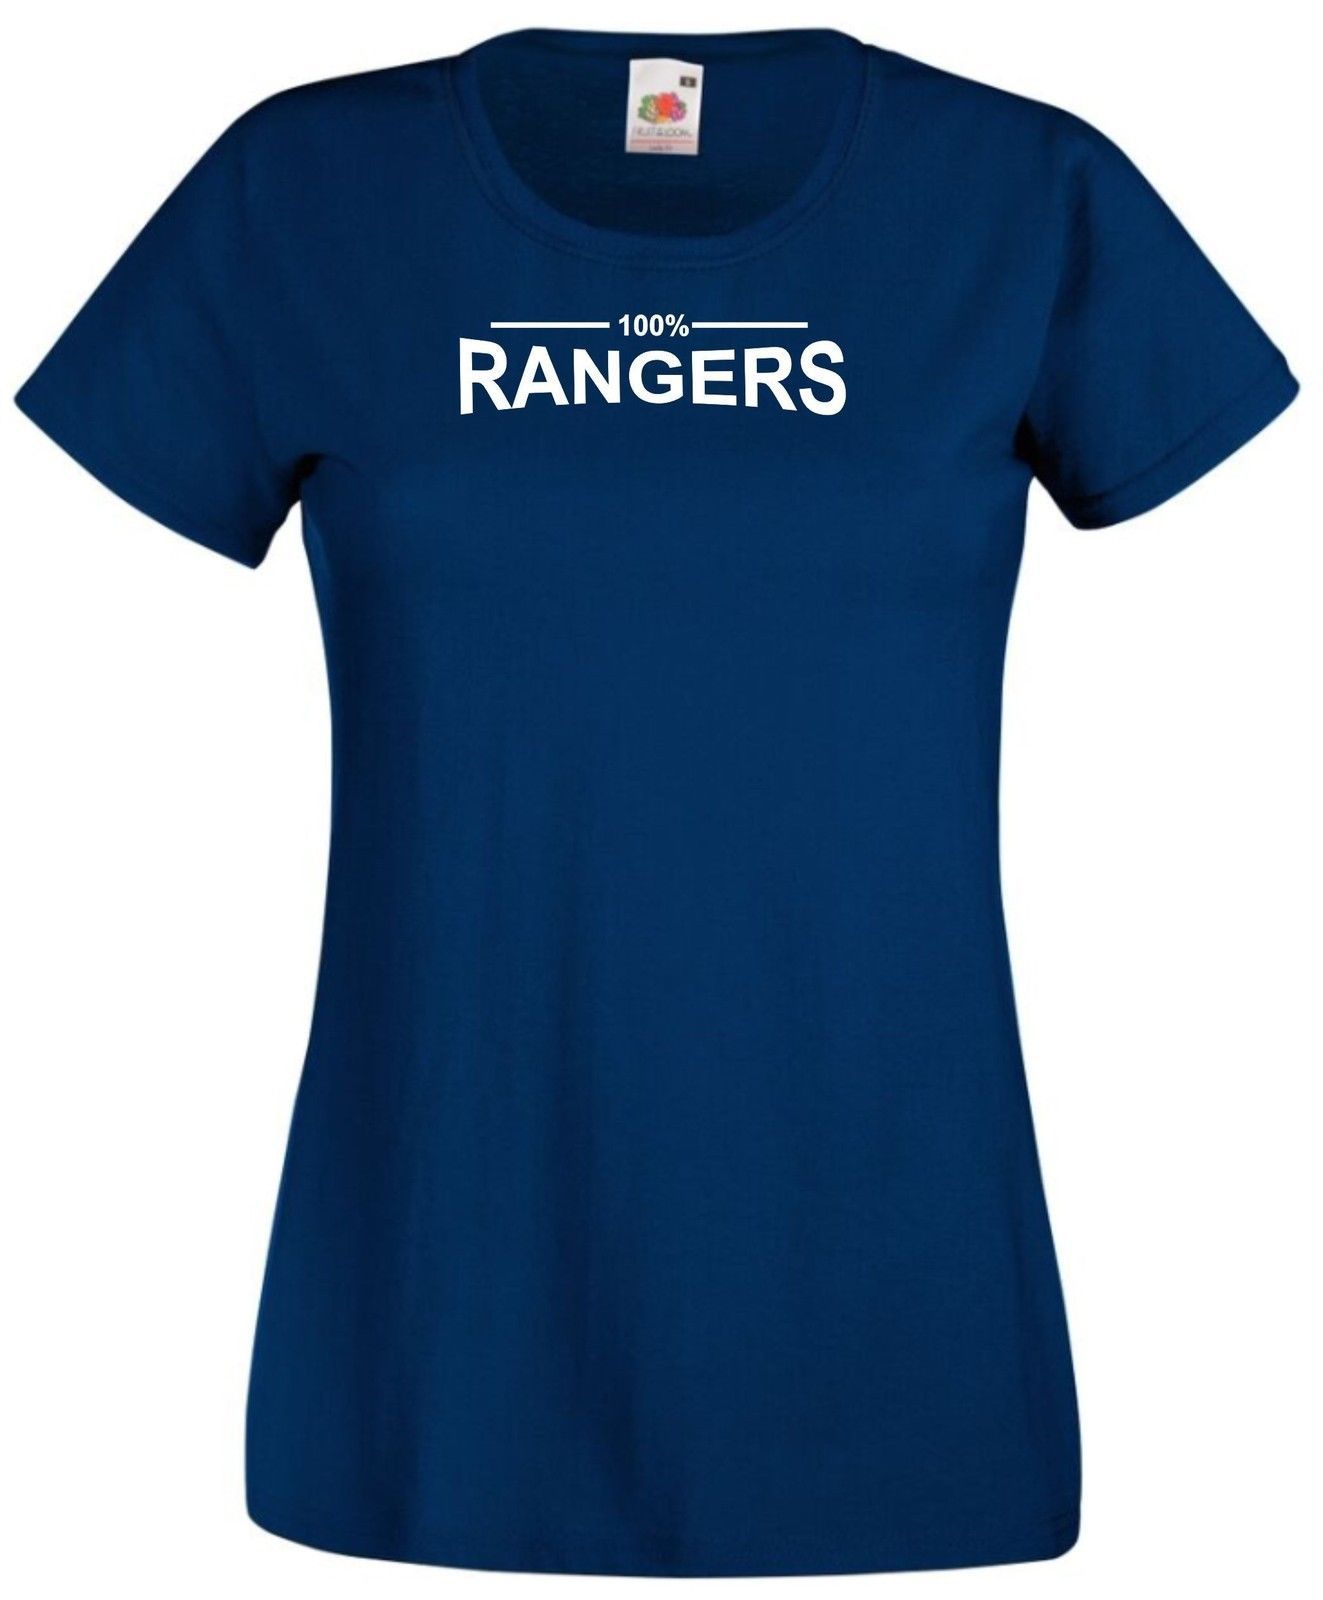 rangers fan shirts